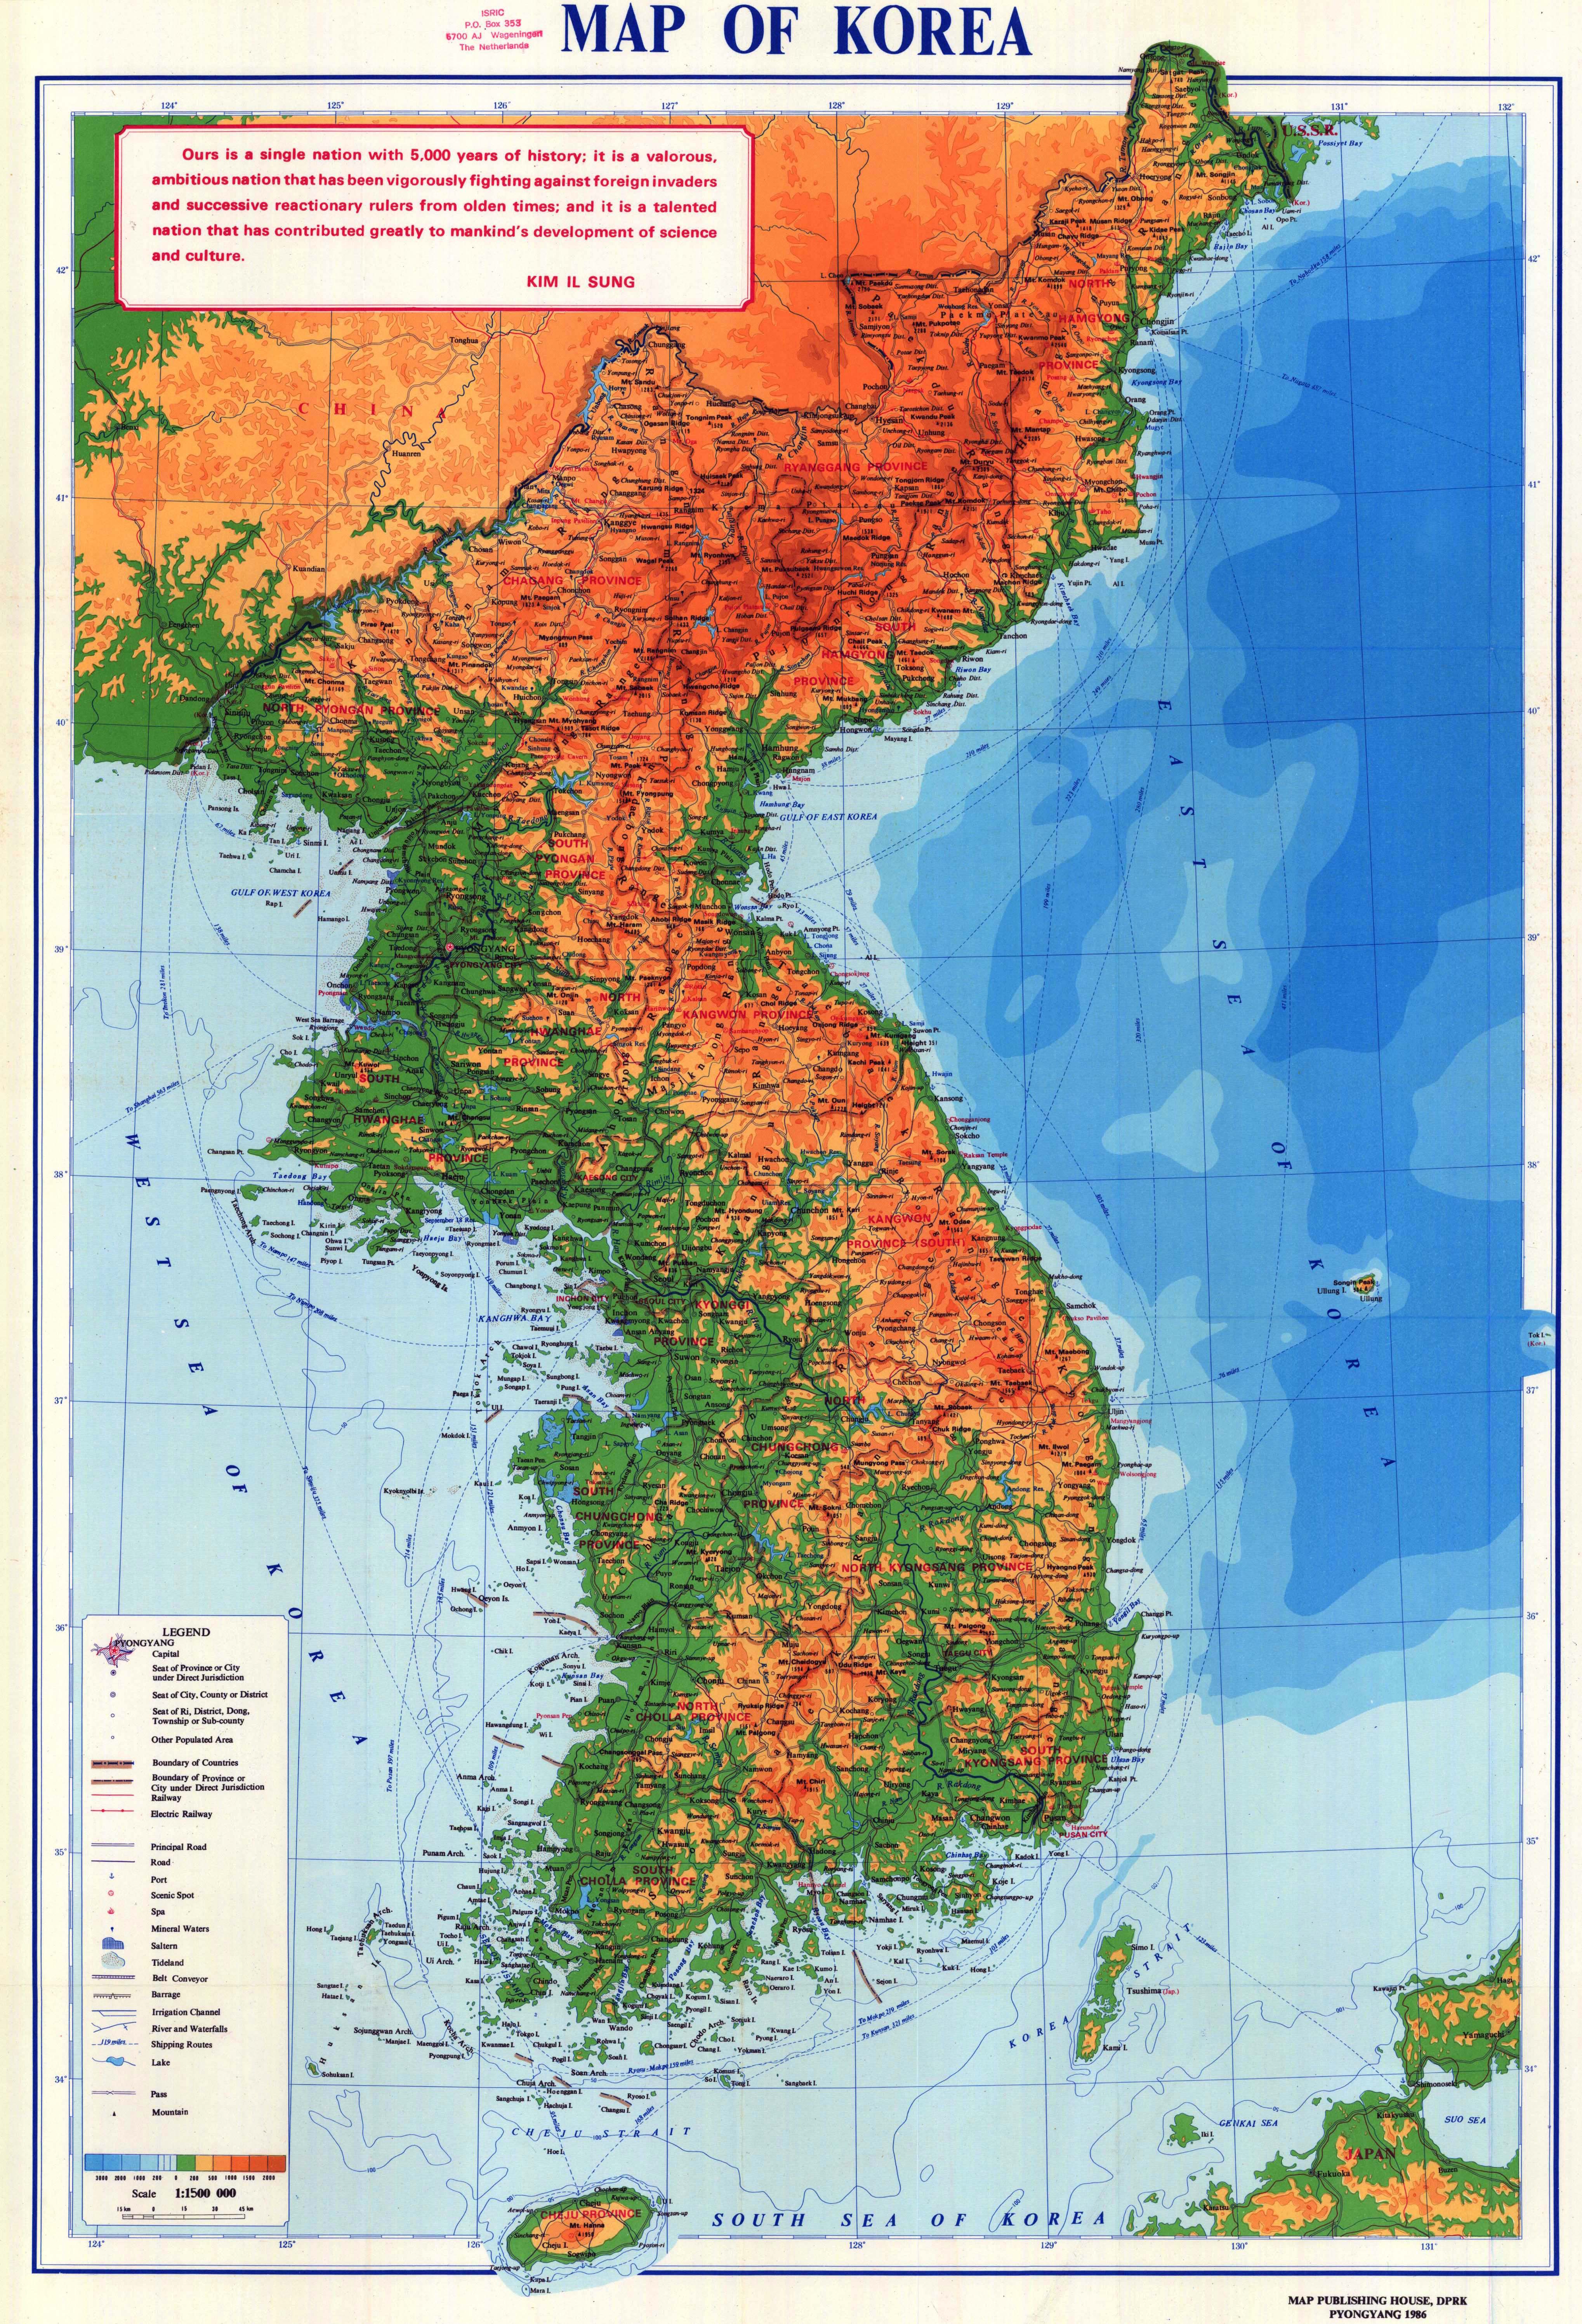 korean peninsula world map